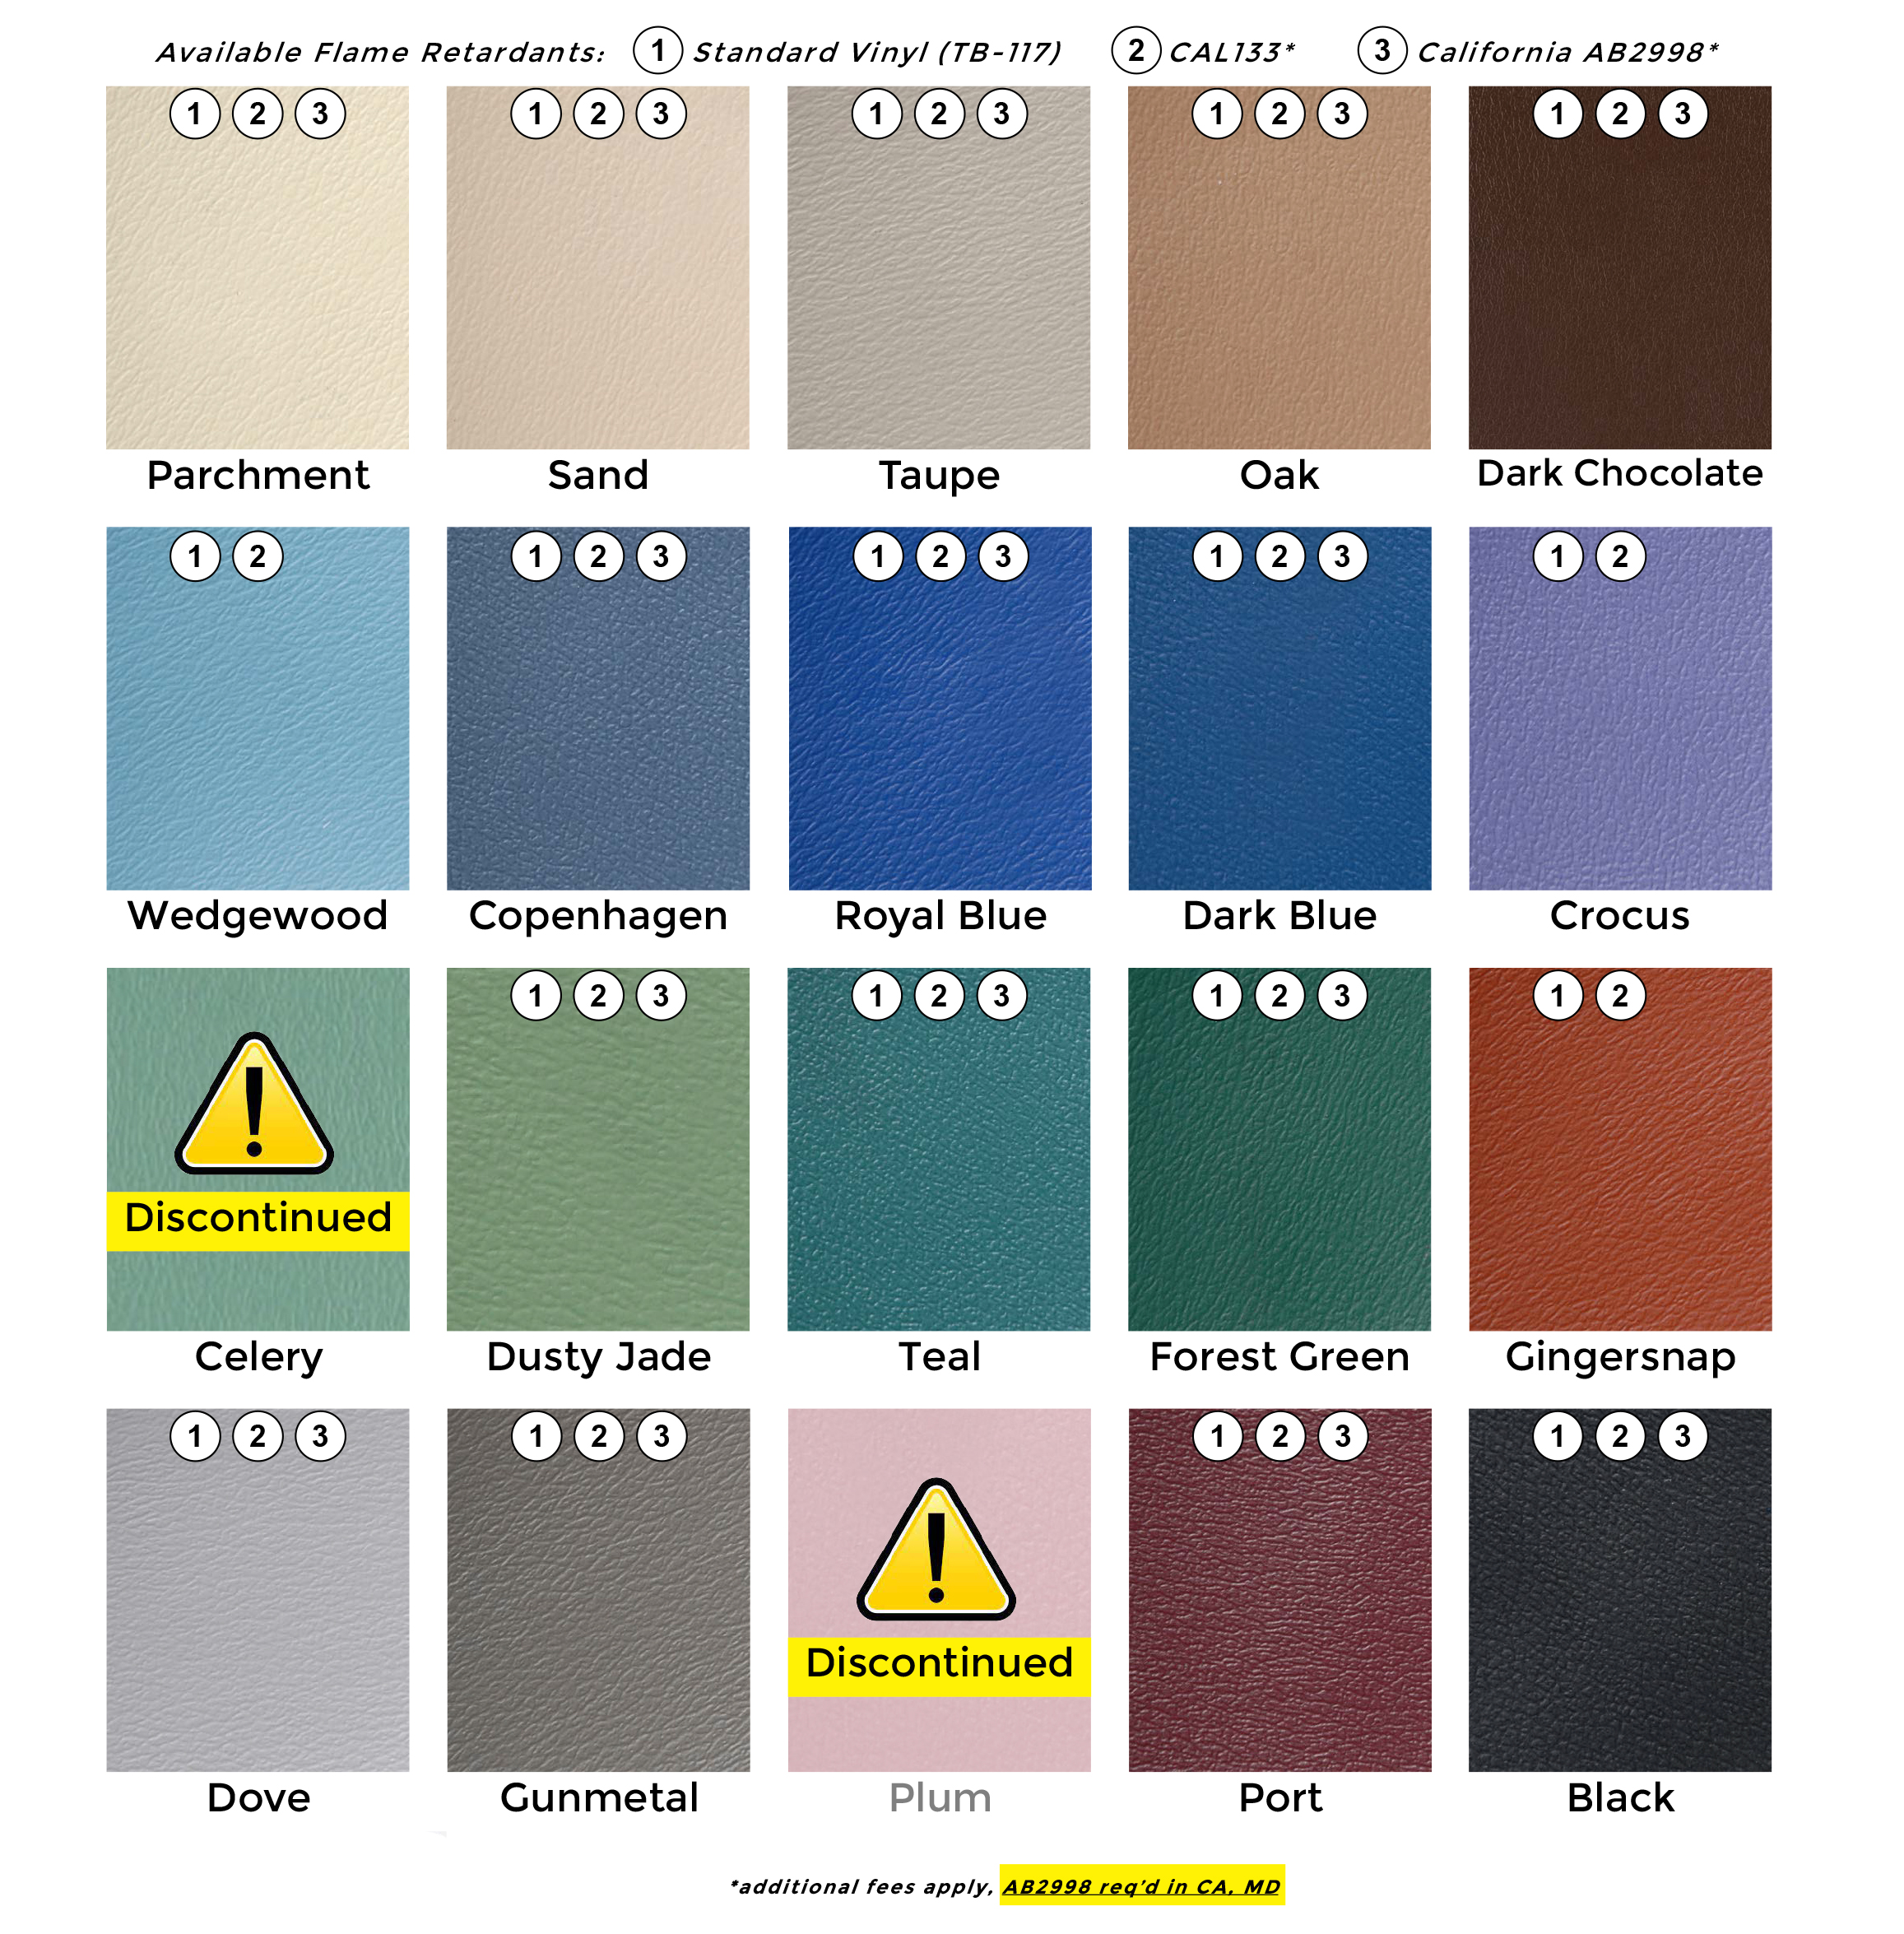 Custom Comfort Vinyl Colors - Standard and CAL133